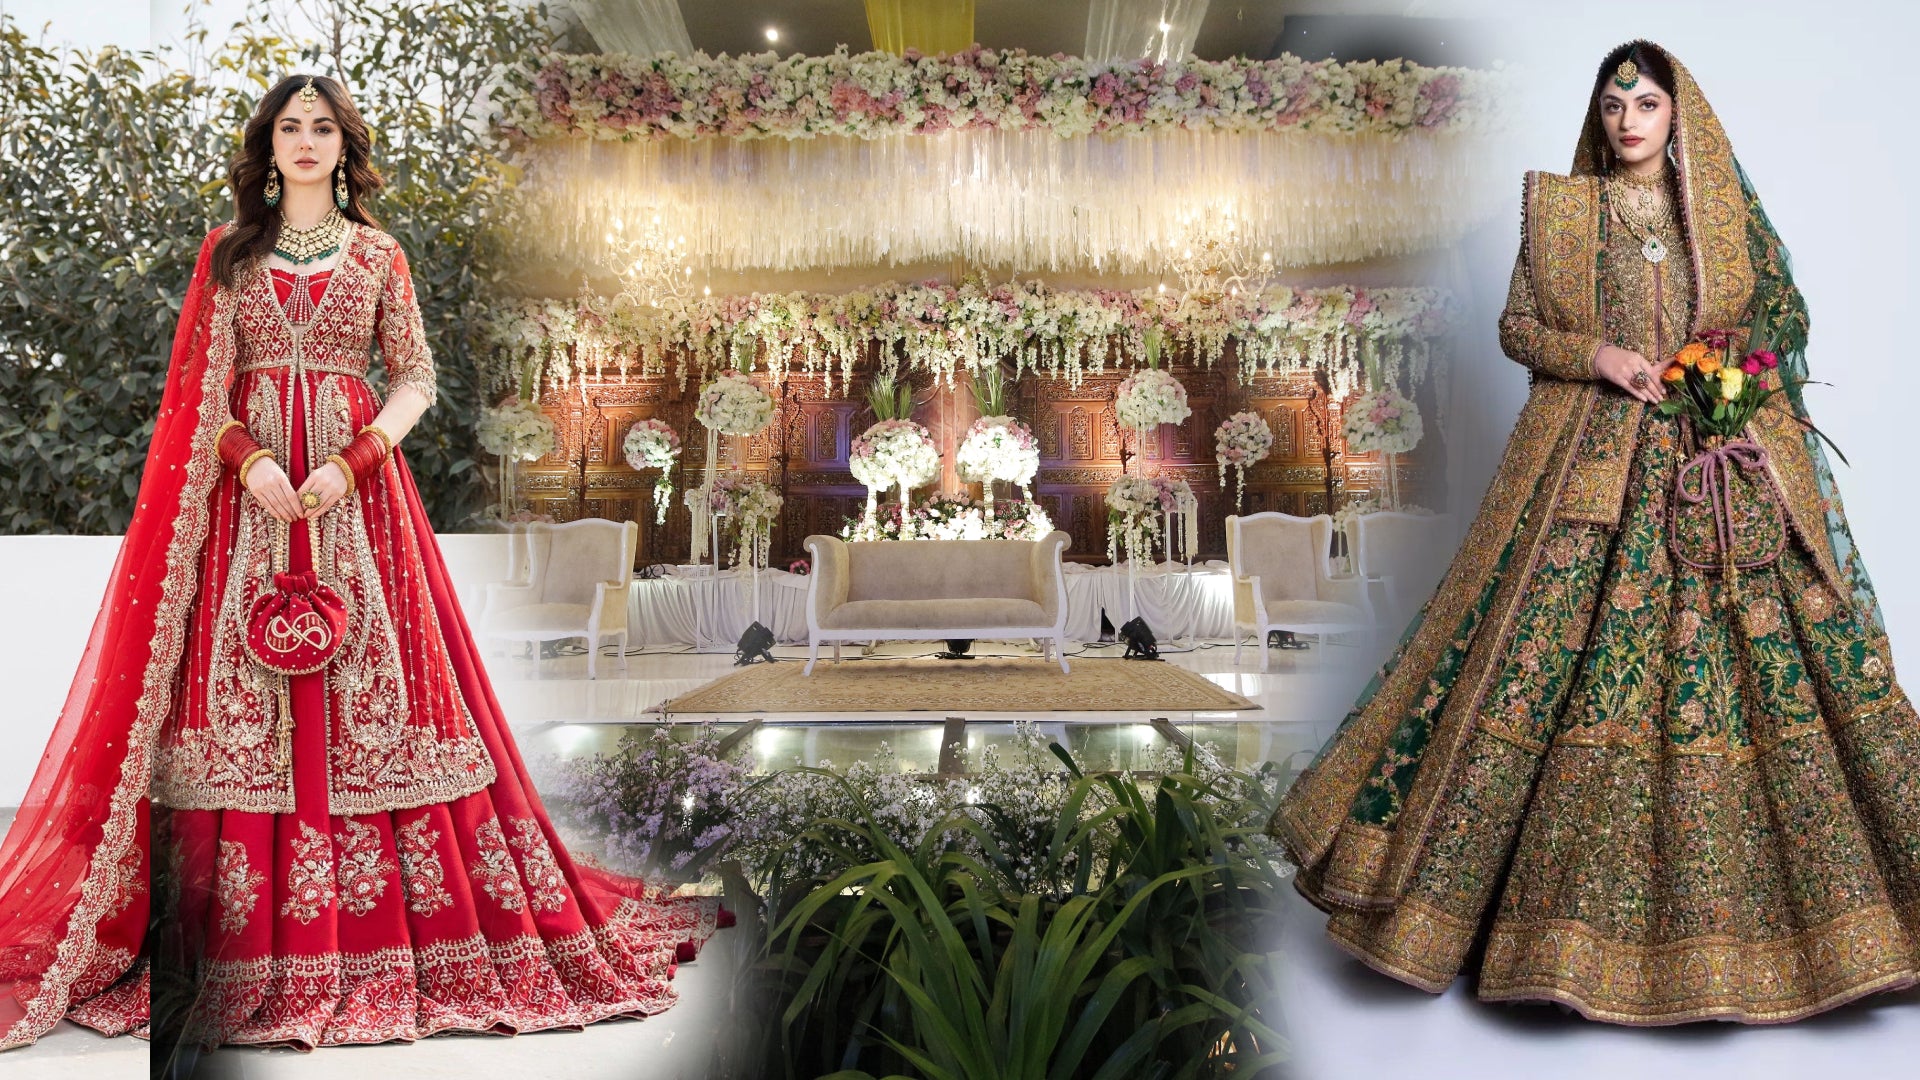 10 Unforgettable Wedding Theme Ideas for Pakistani-Indian Weddings